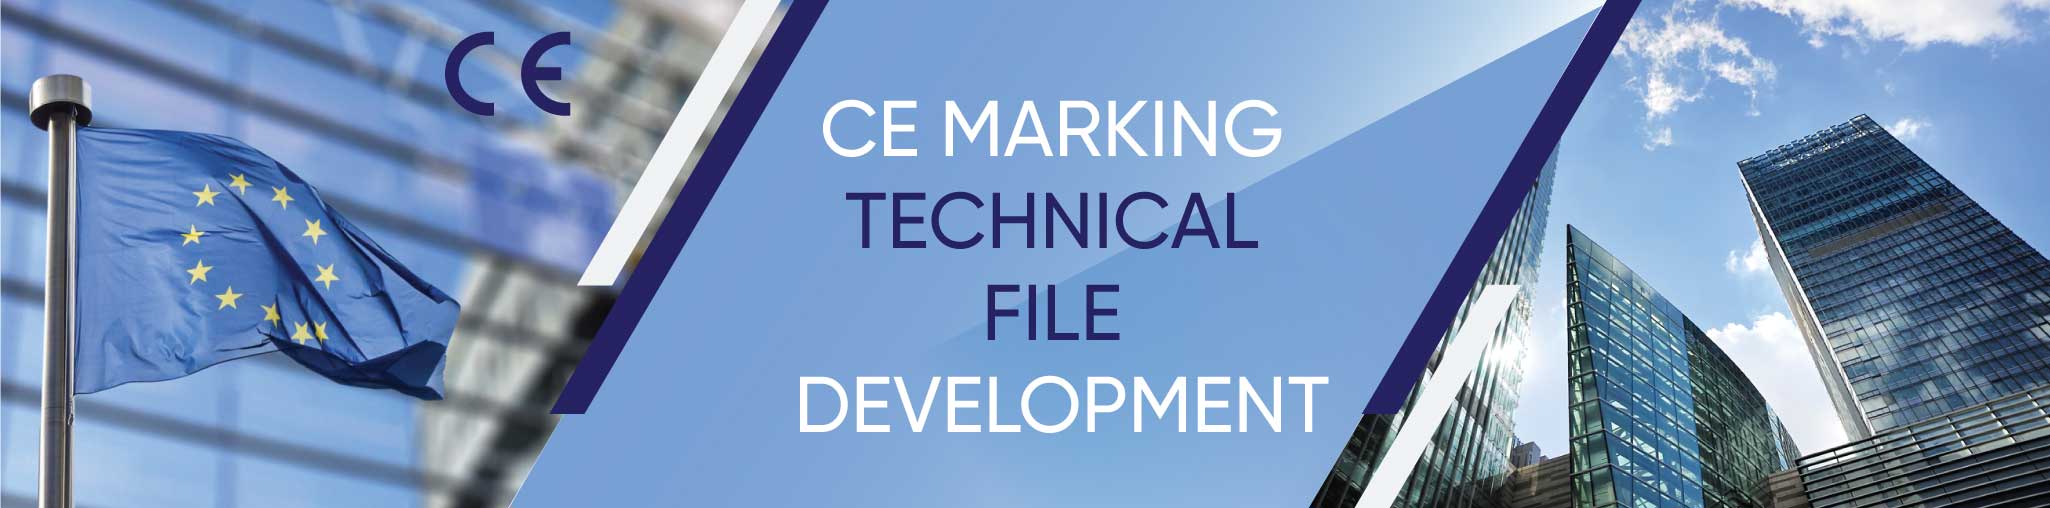 CE Marking Technical File Development